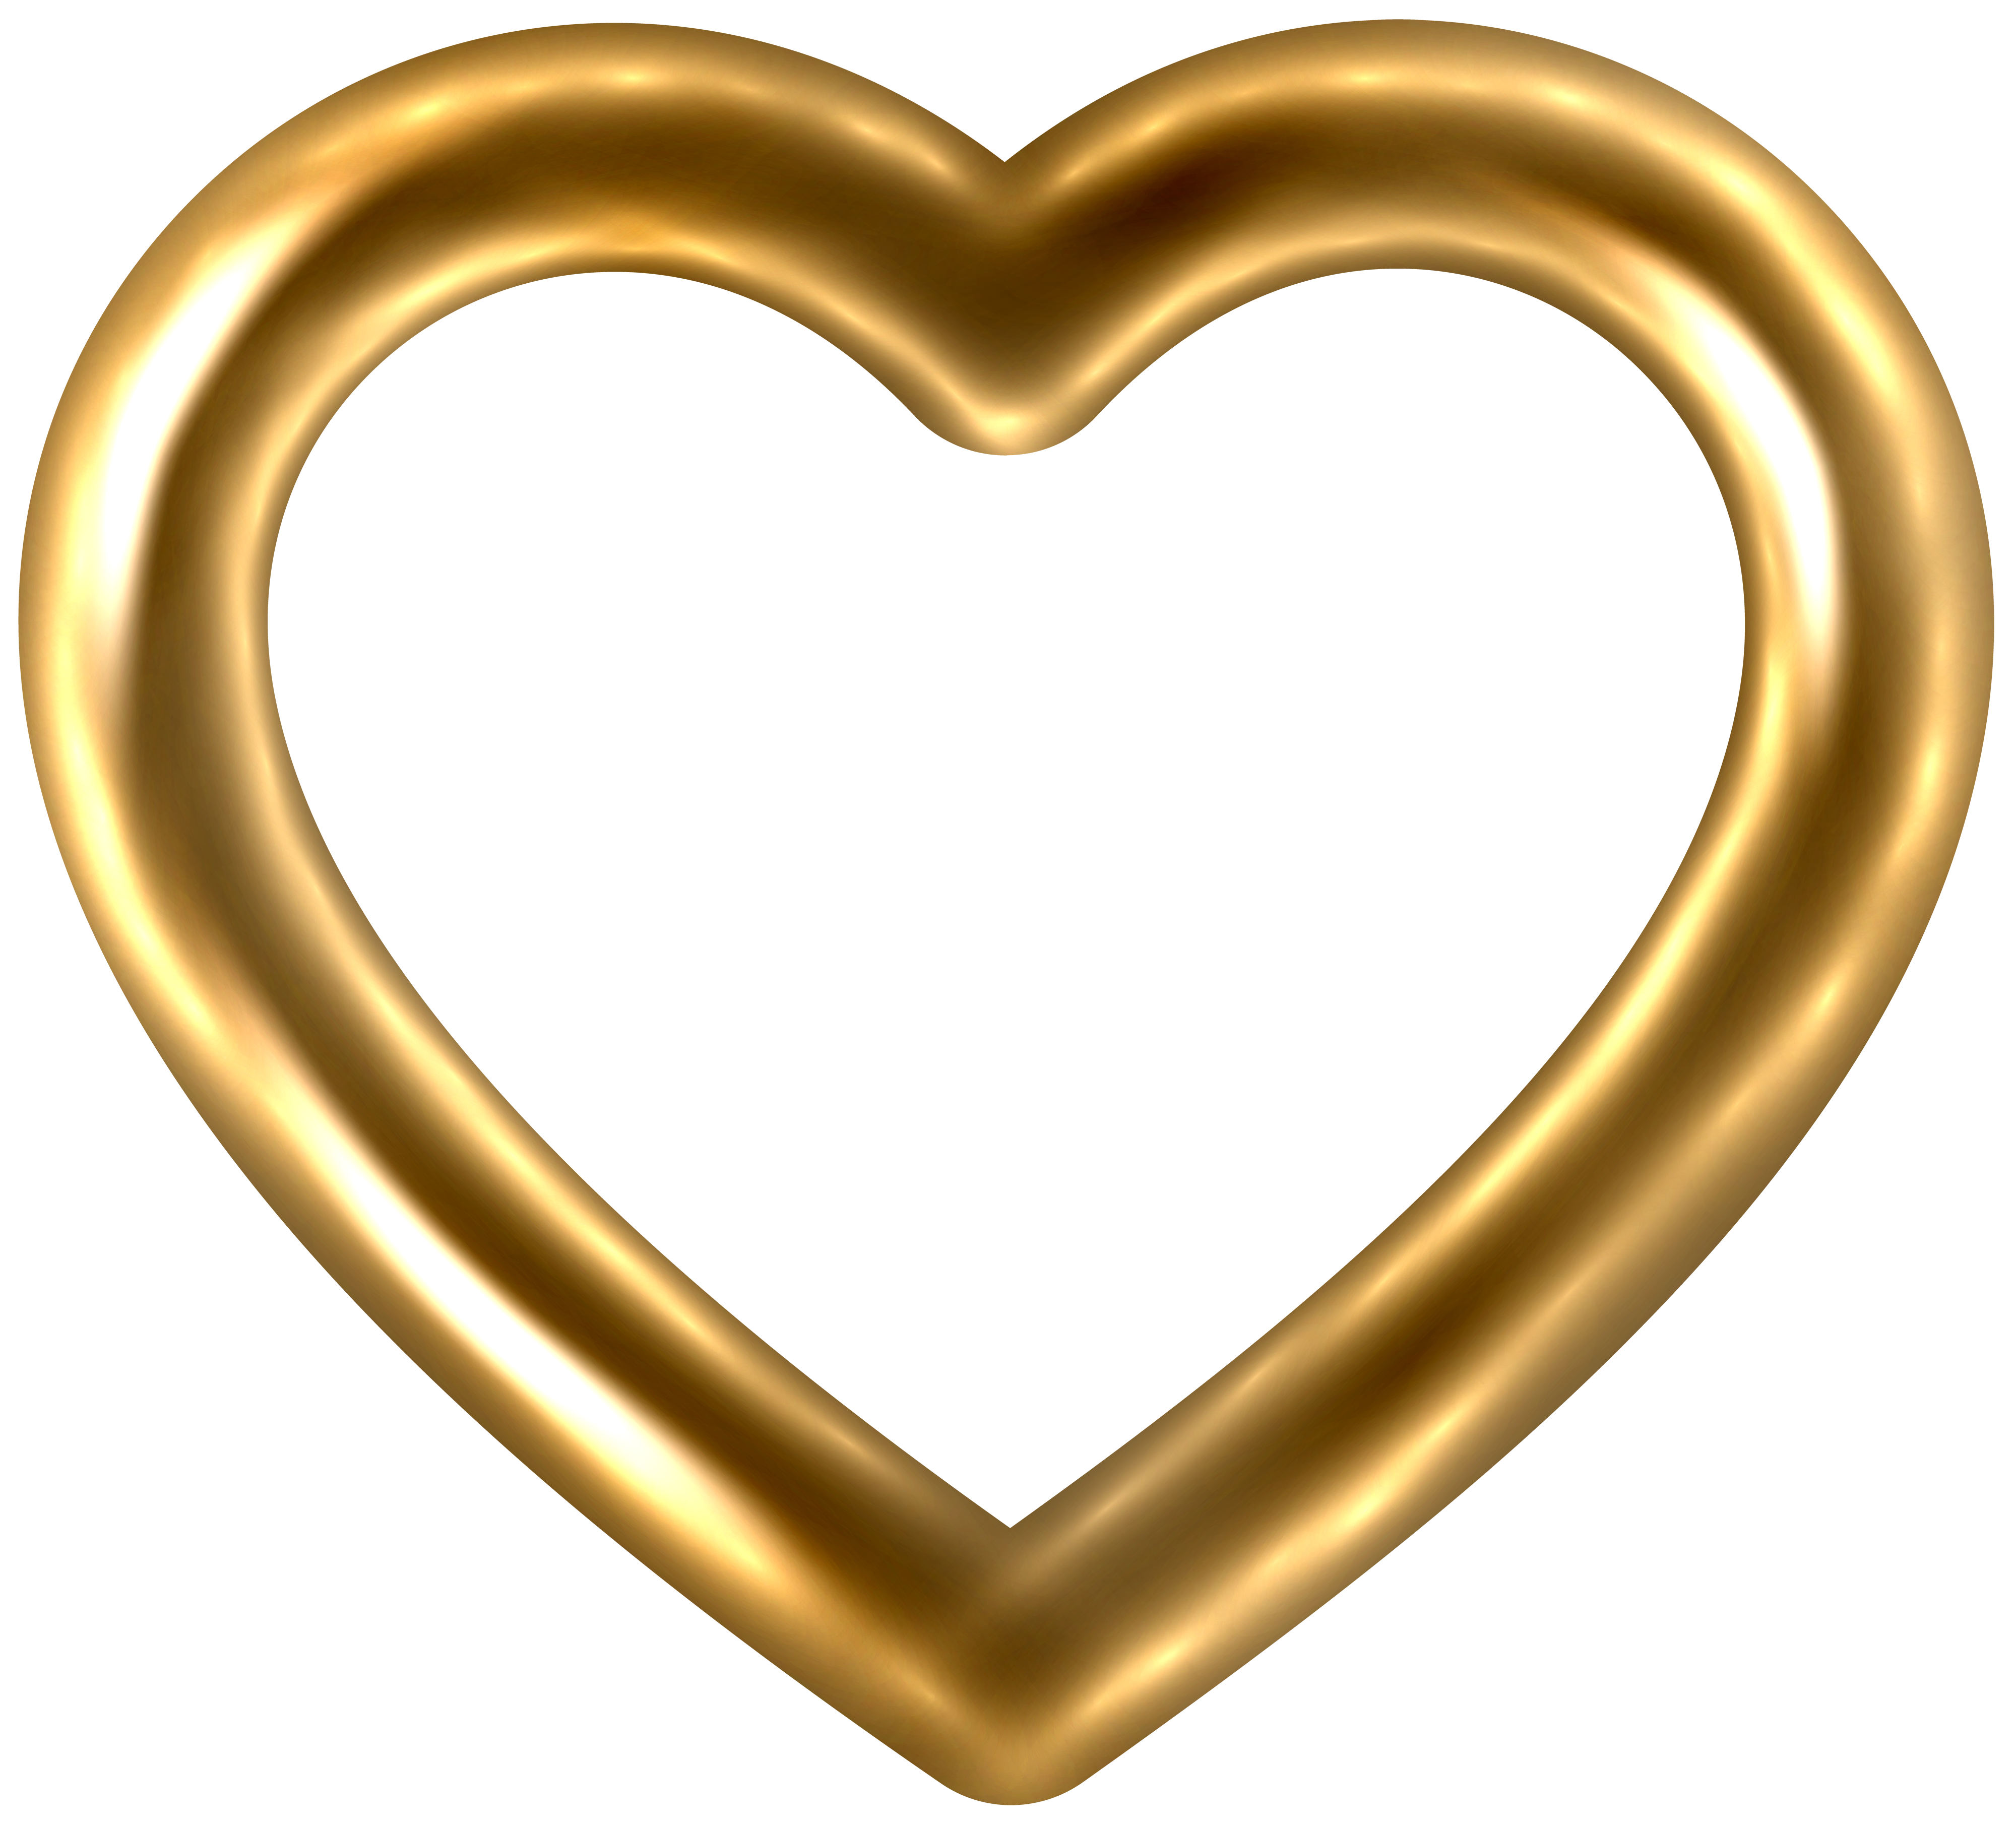 Transparent Gold Heart PNG Clip Art Image.